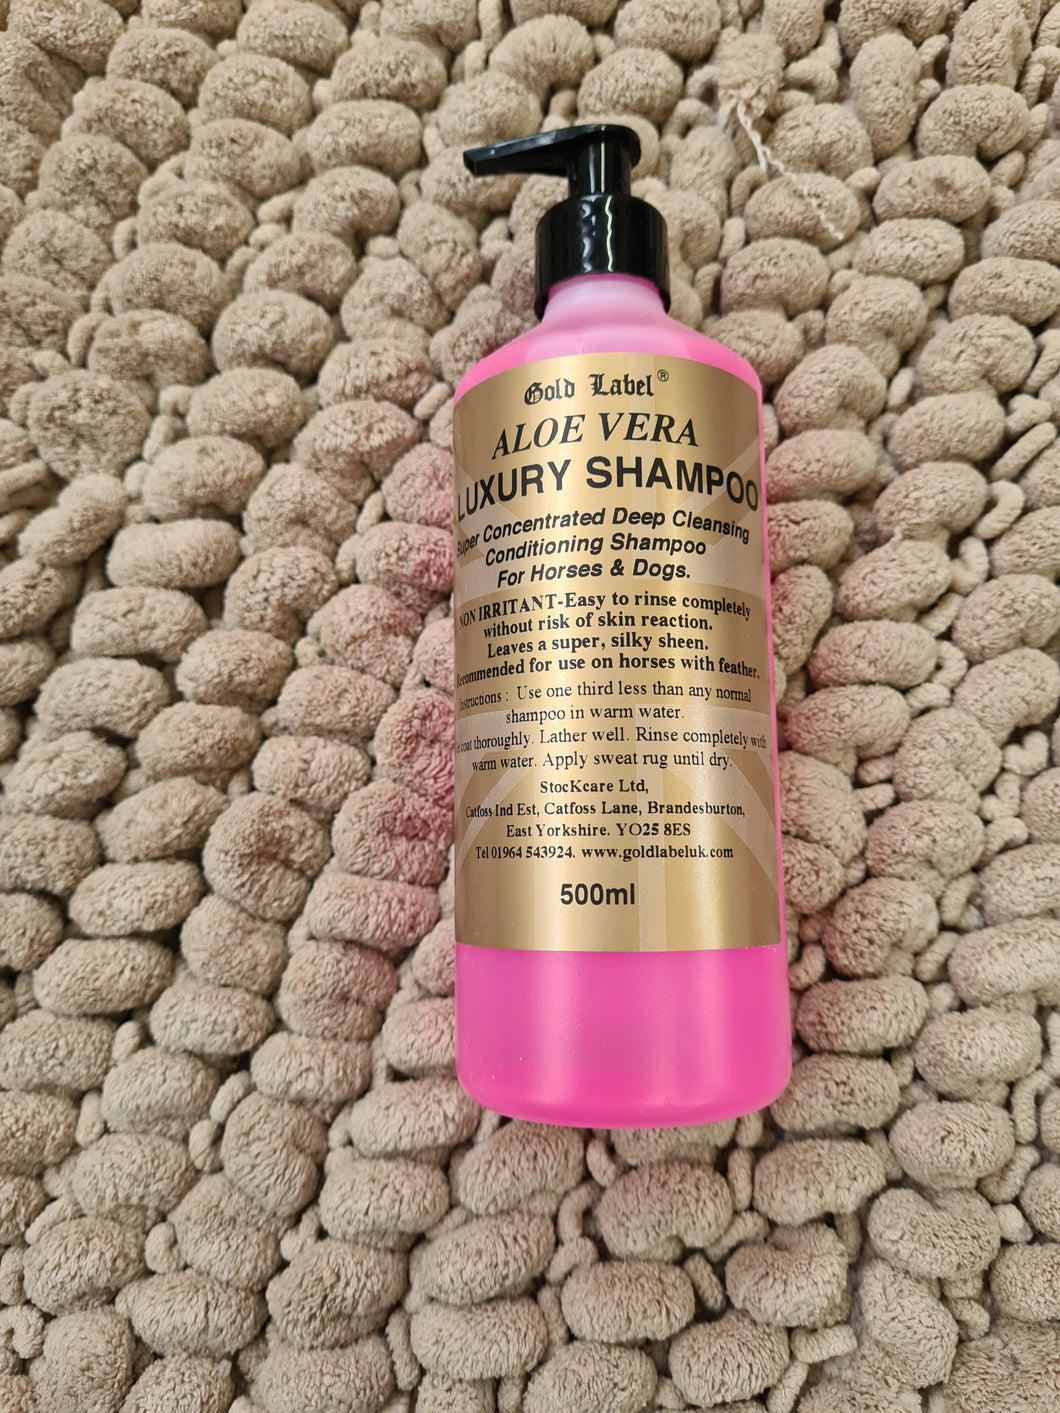 New gold label aloe Vera luxury shampoo FREE POSTAGE 🟣